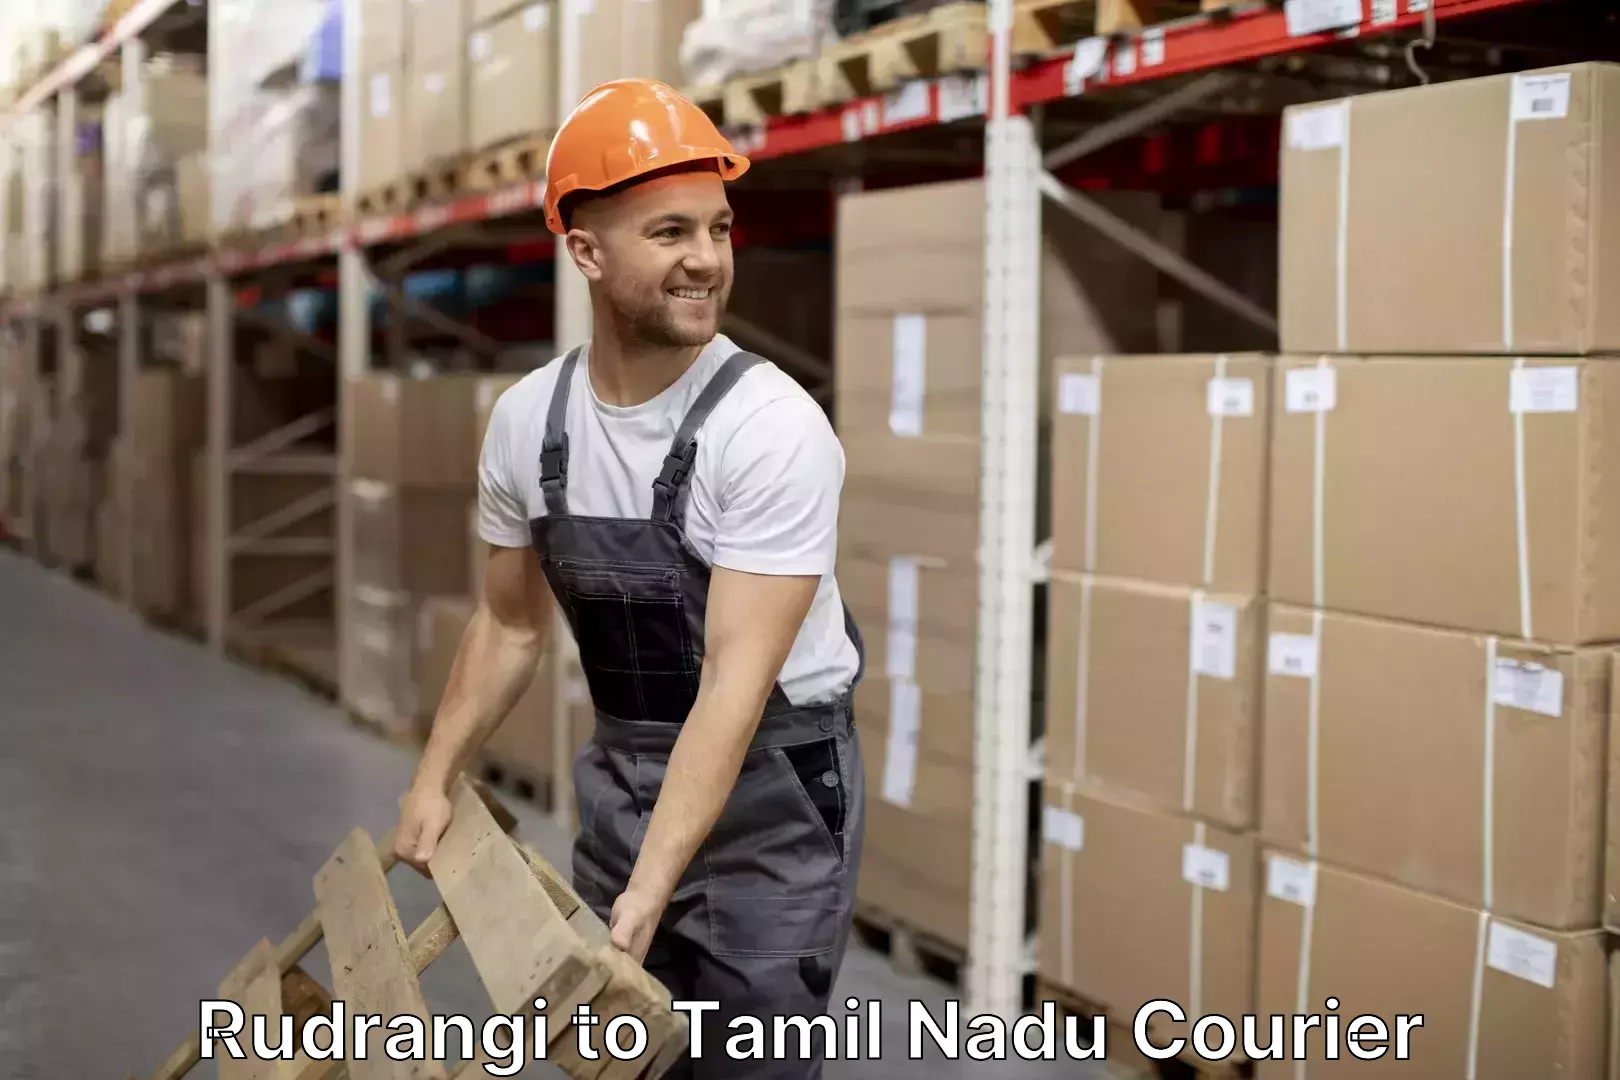 Furniture moving experts Rudrangi to Tamil Nadu